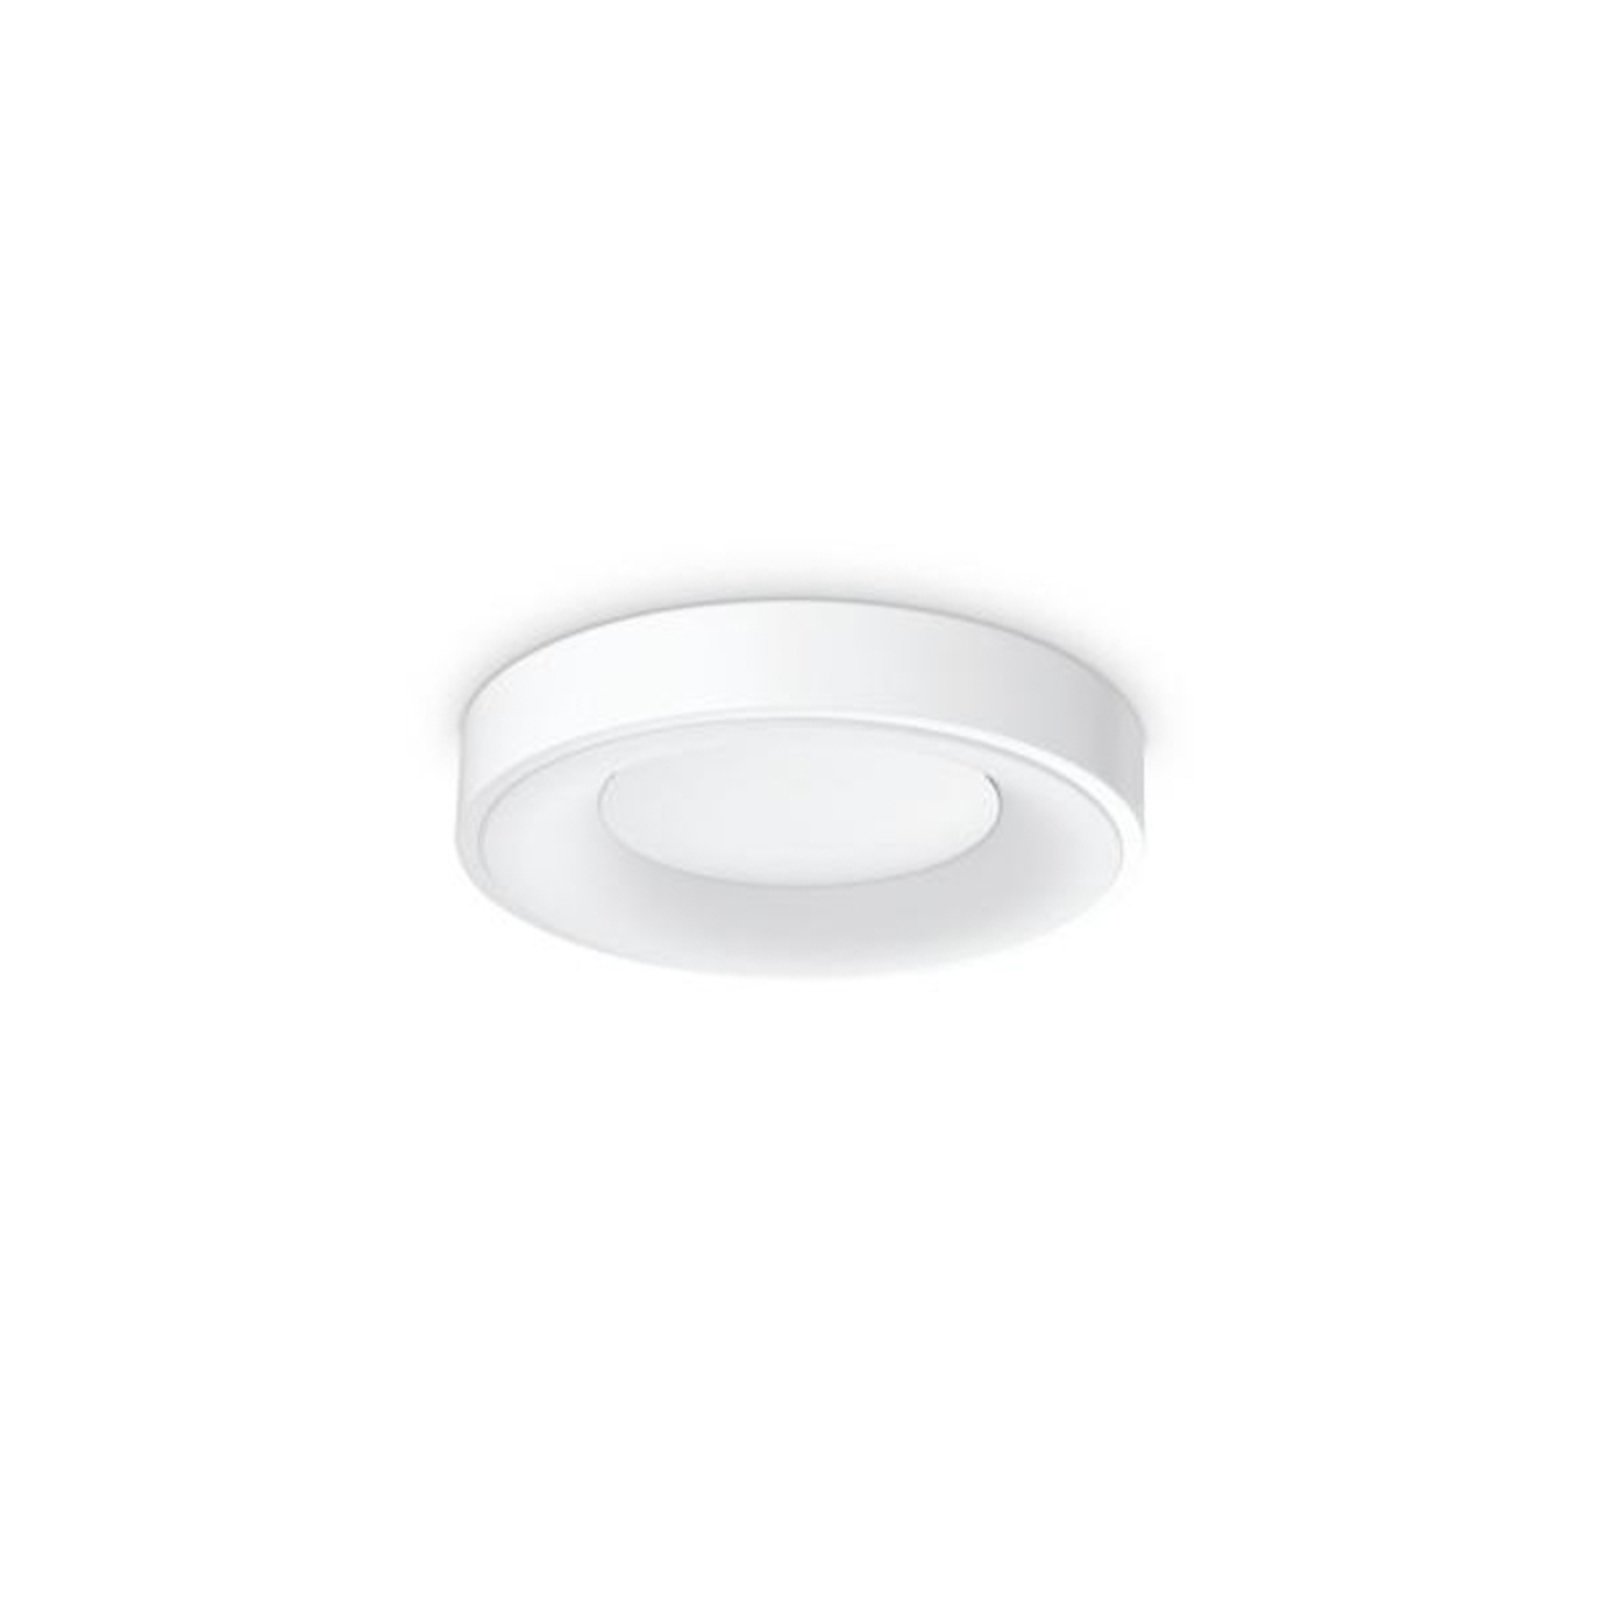 Ideal Lux taklampe Planet, hvit, Ø 30 cm, metall